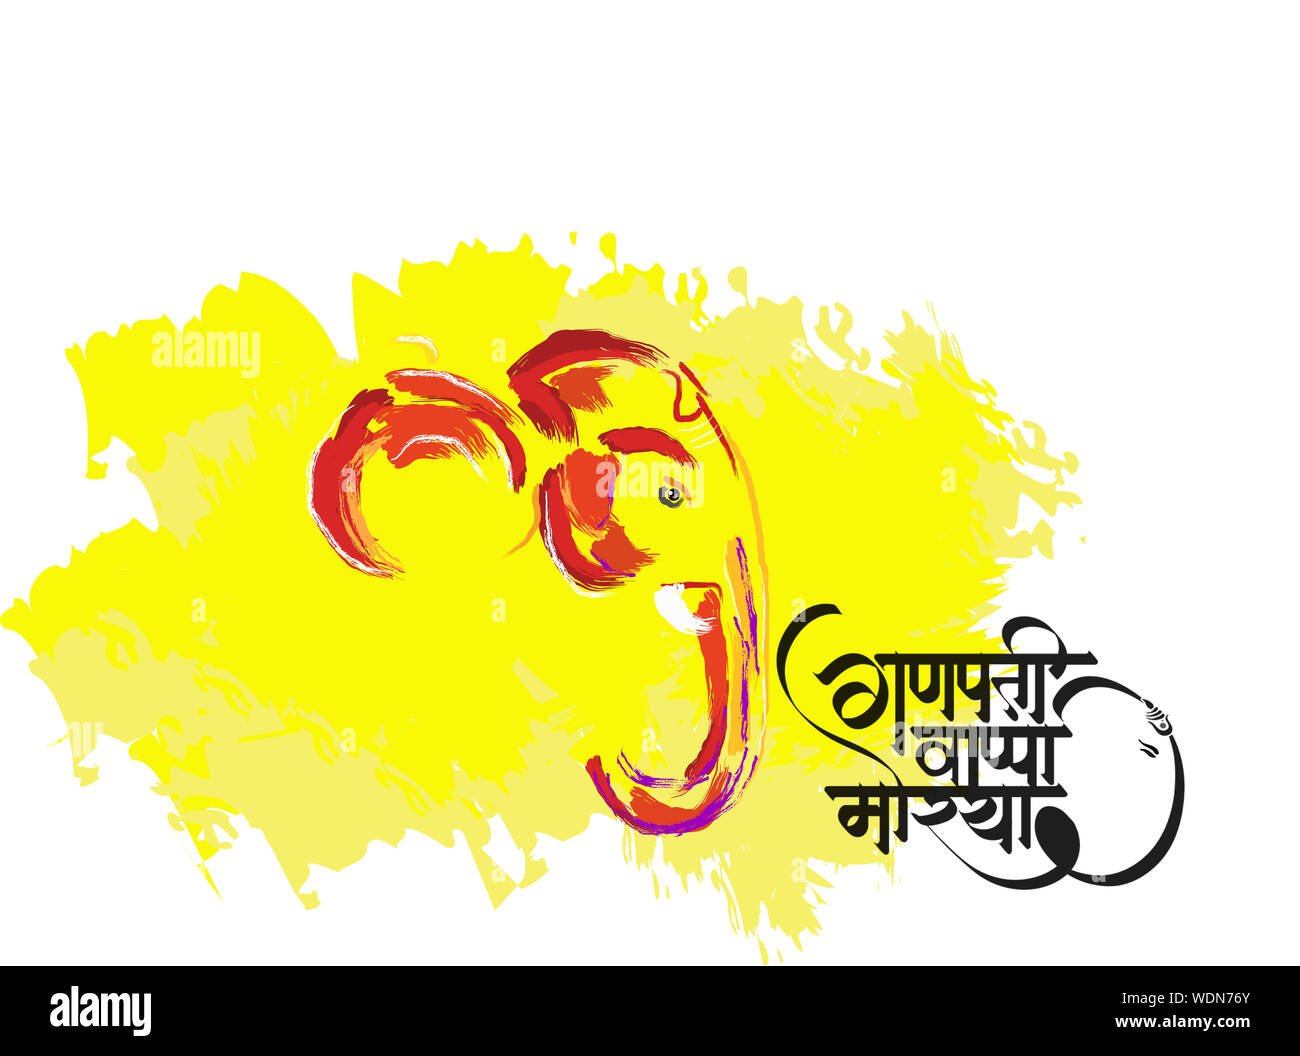 Ganesh Chaturthi Festival Greeting Card Illustration with Hindi ...